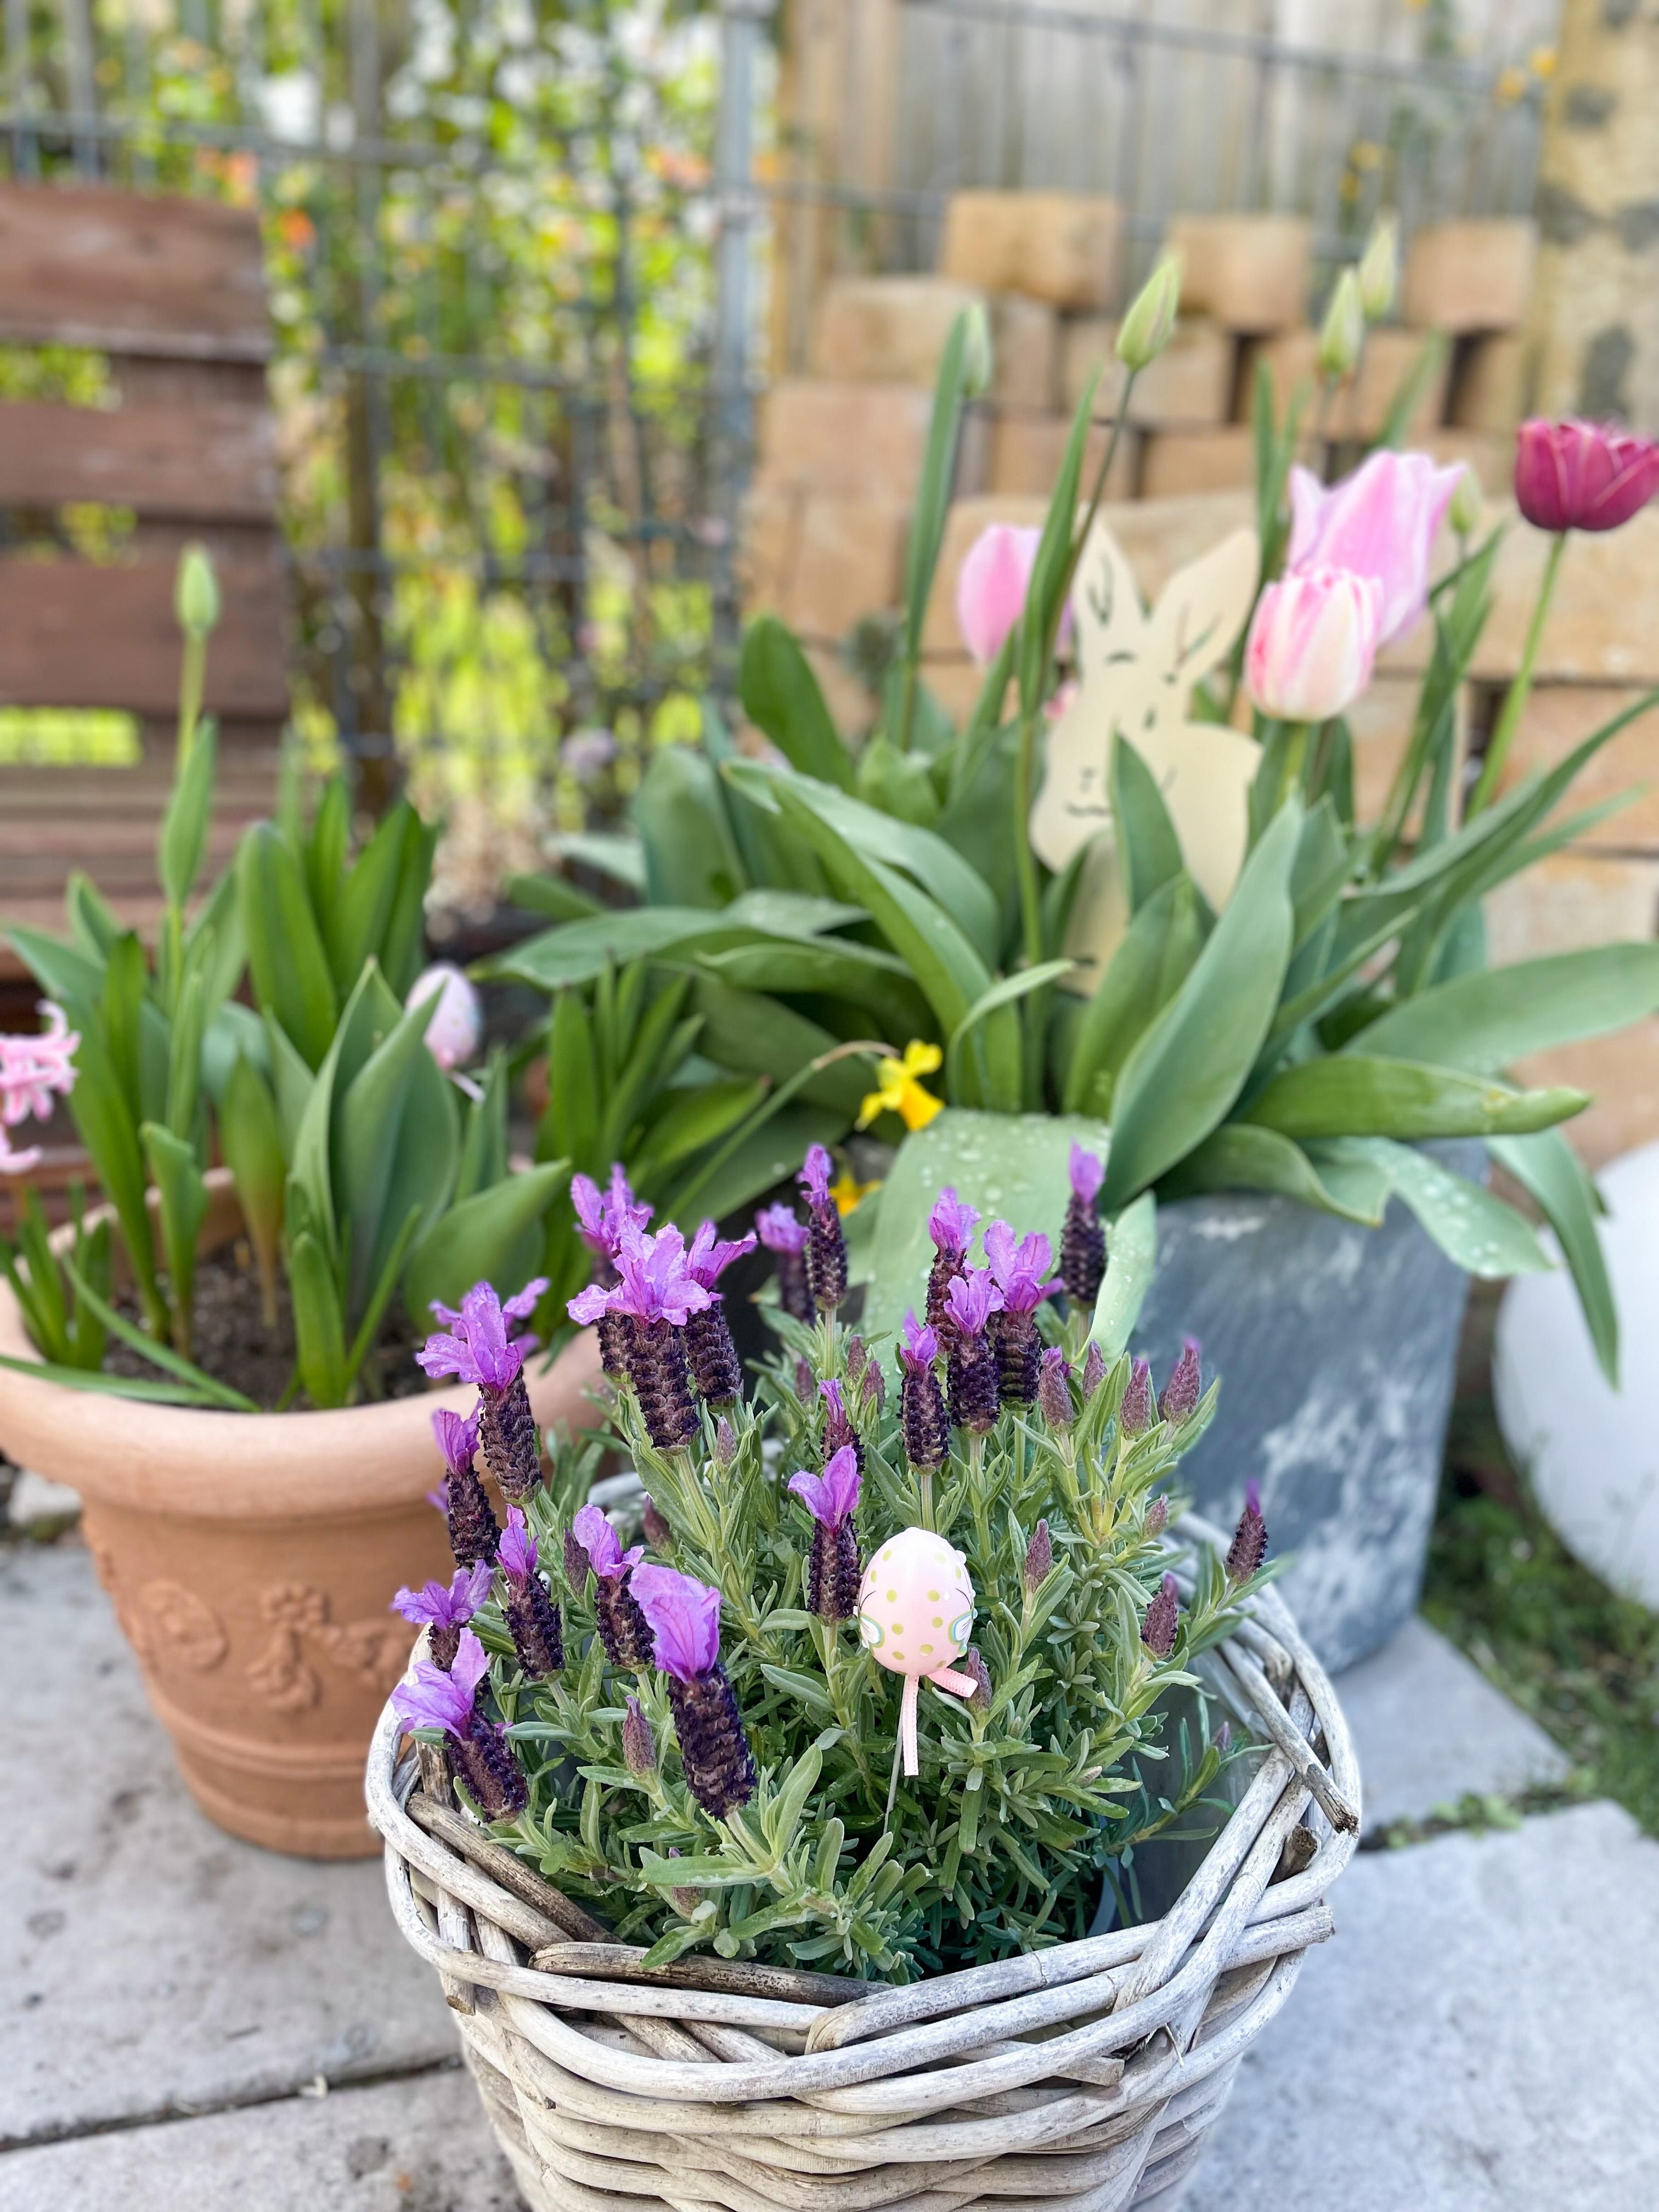 Schön, wenn alles so langsam blüht 🌸! #tulpen #frühling #ostern #lavendel #osterdeko #garten #frühjahr #frühlingsgefühle